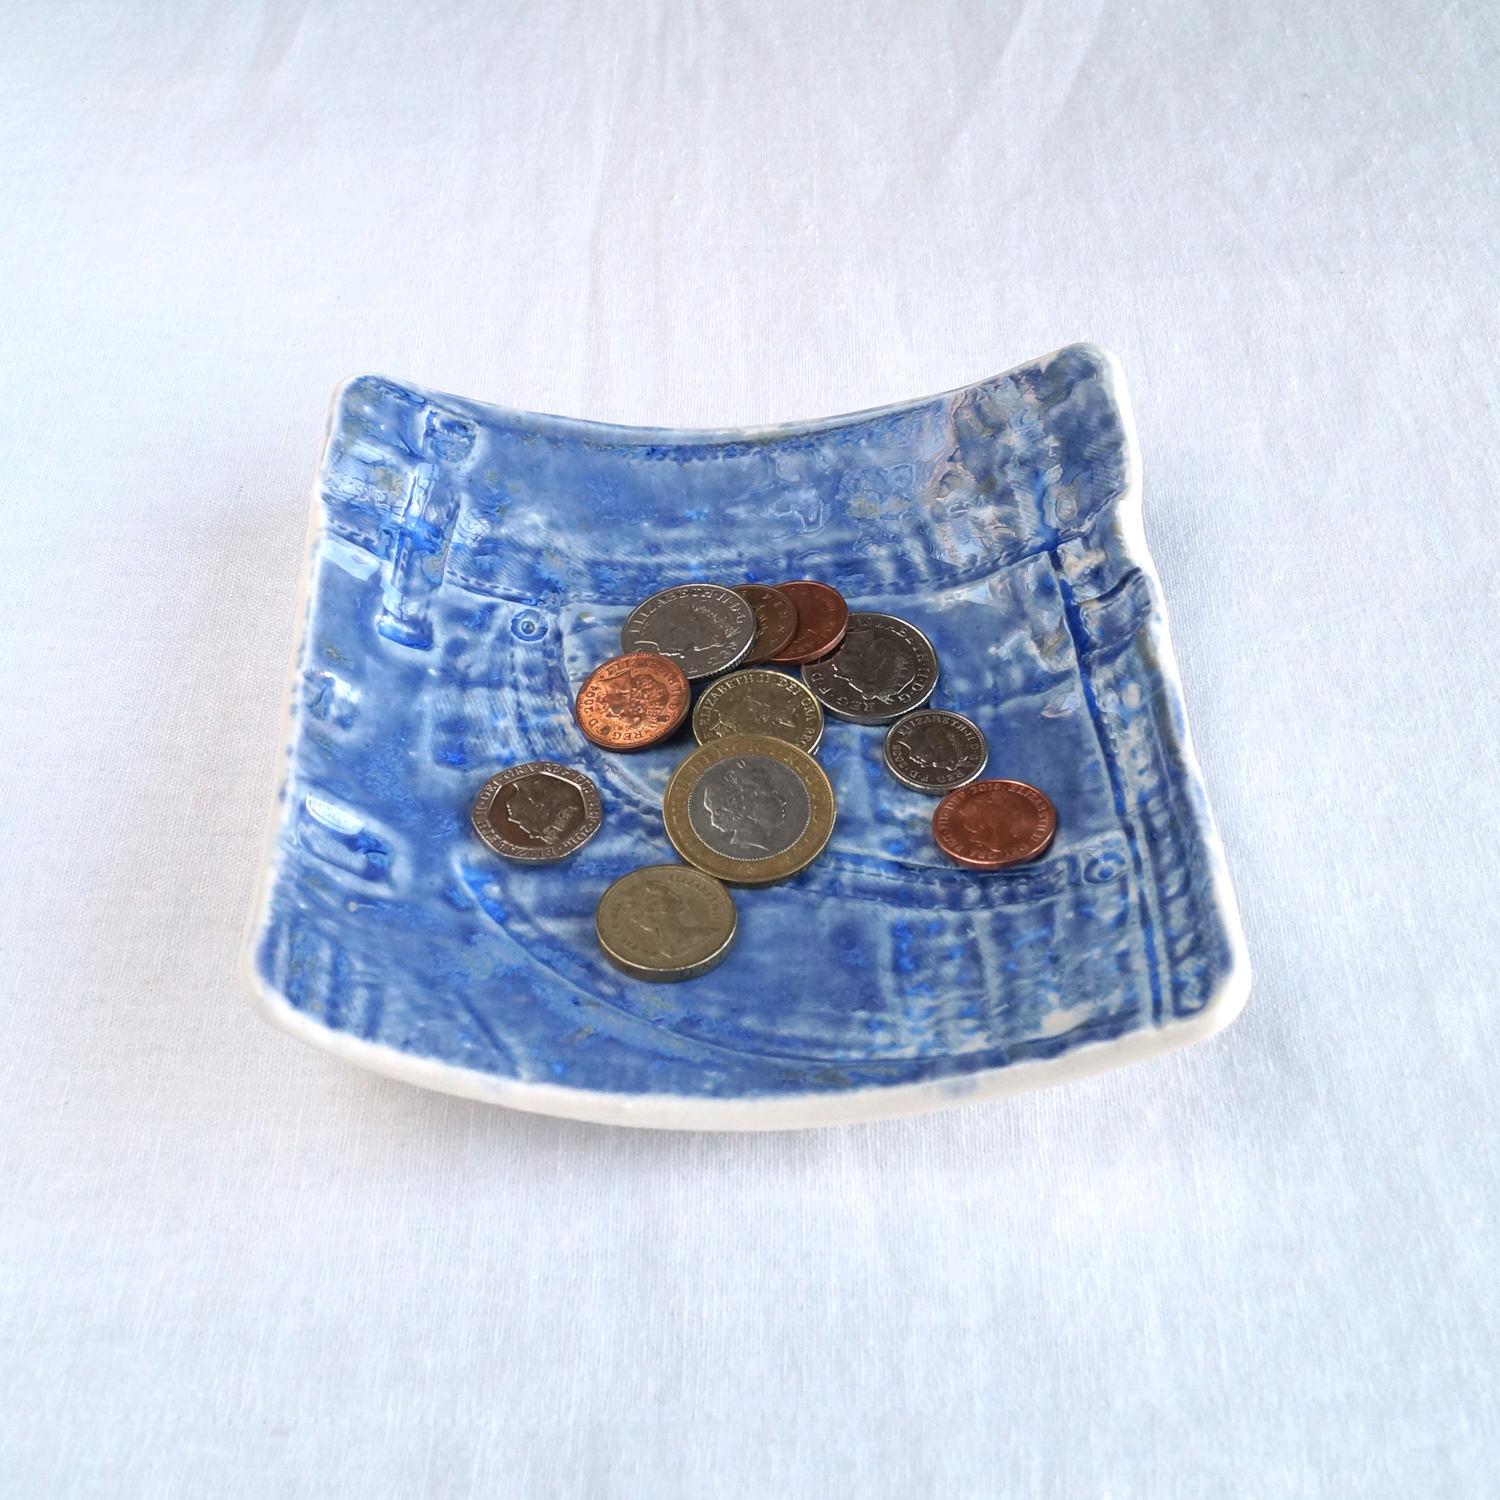 JEANS bowl, ceramic coin bowl, white porcelain, blue denim, Vanillakiln, UK, ceramic man bowl, square ceramic bowl, 